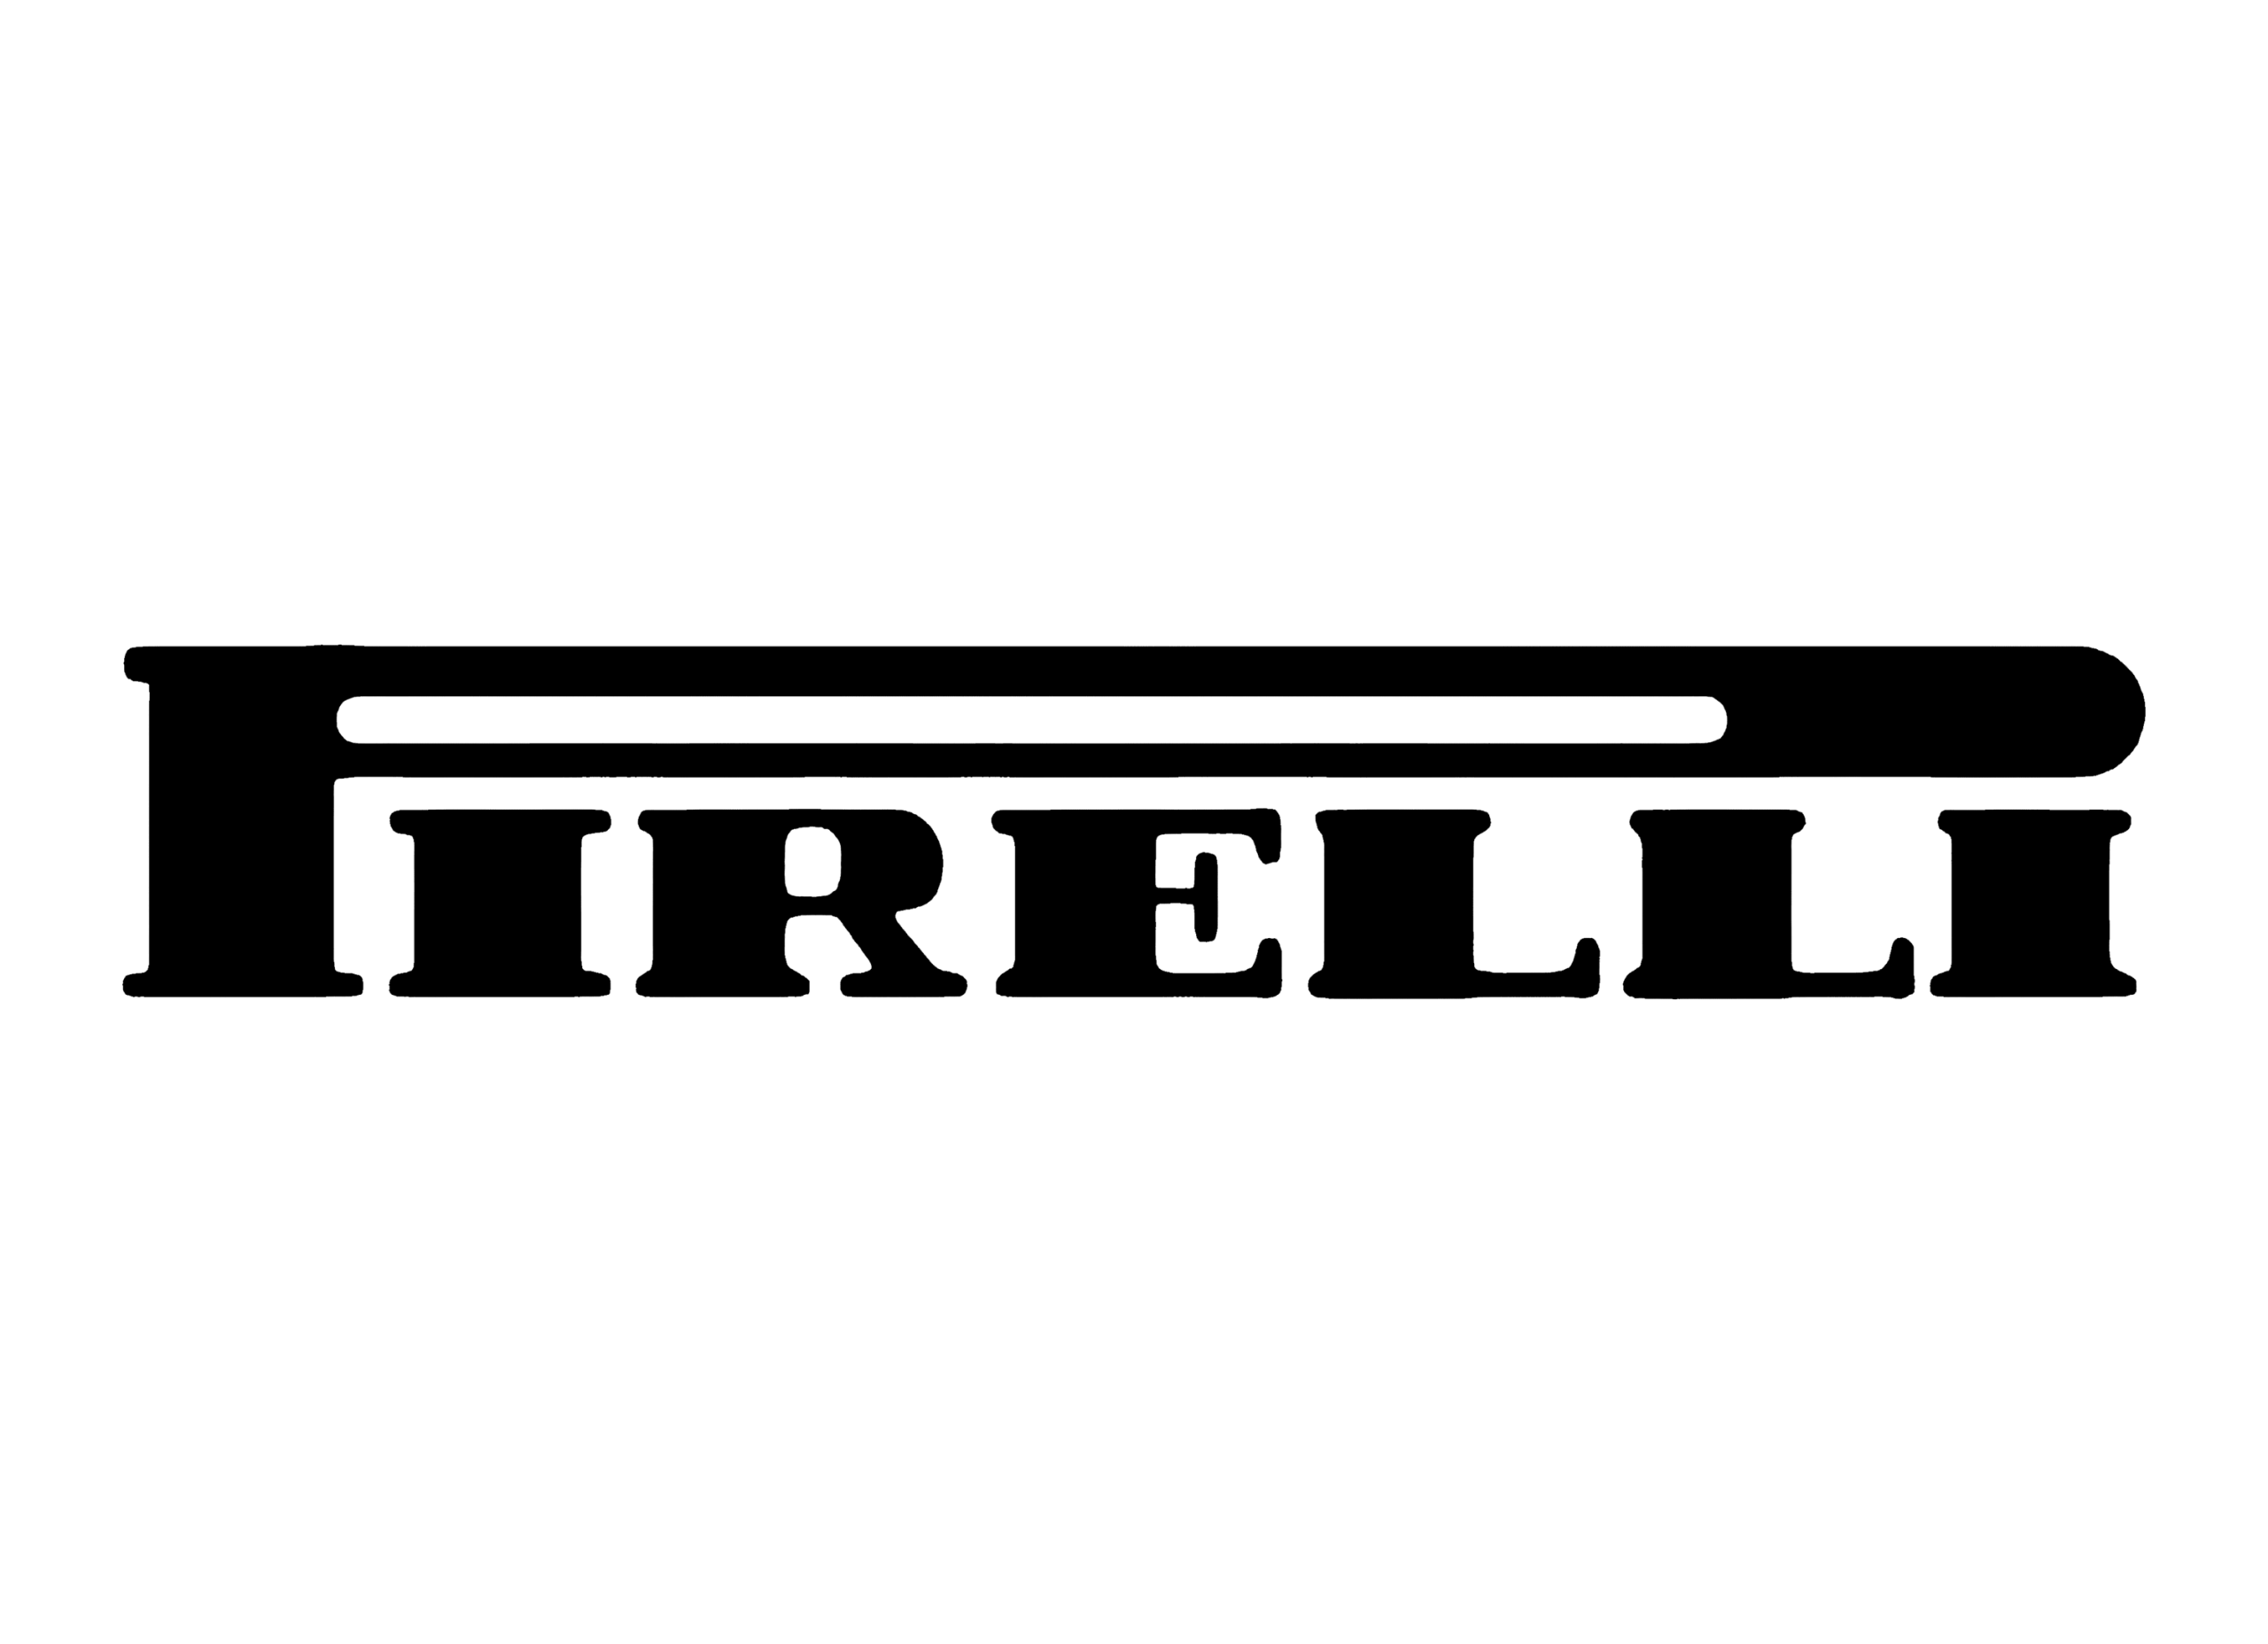 Pirelli logo 1930-1948